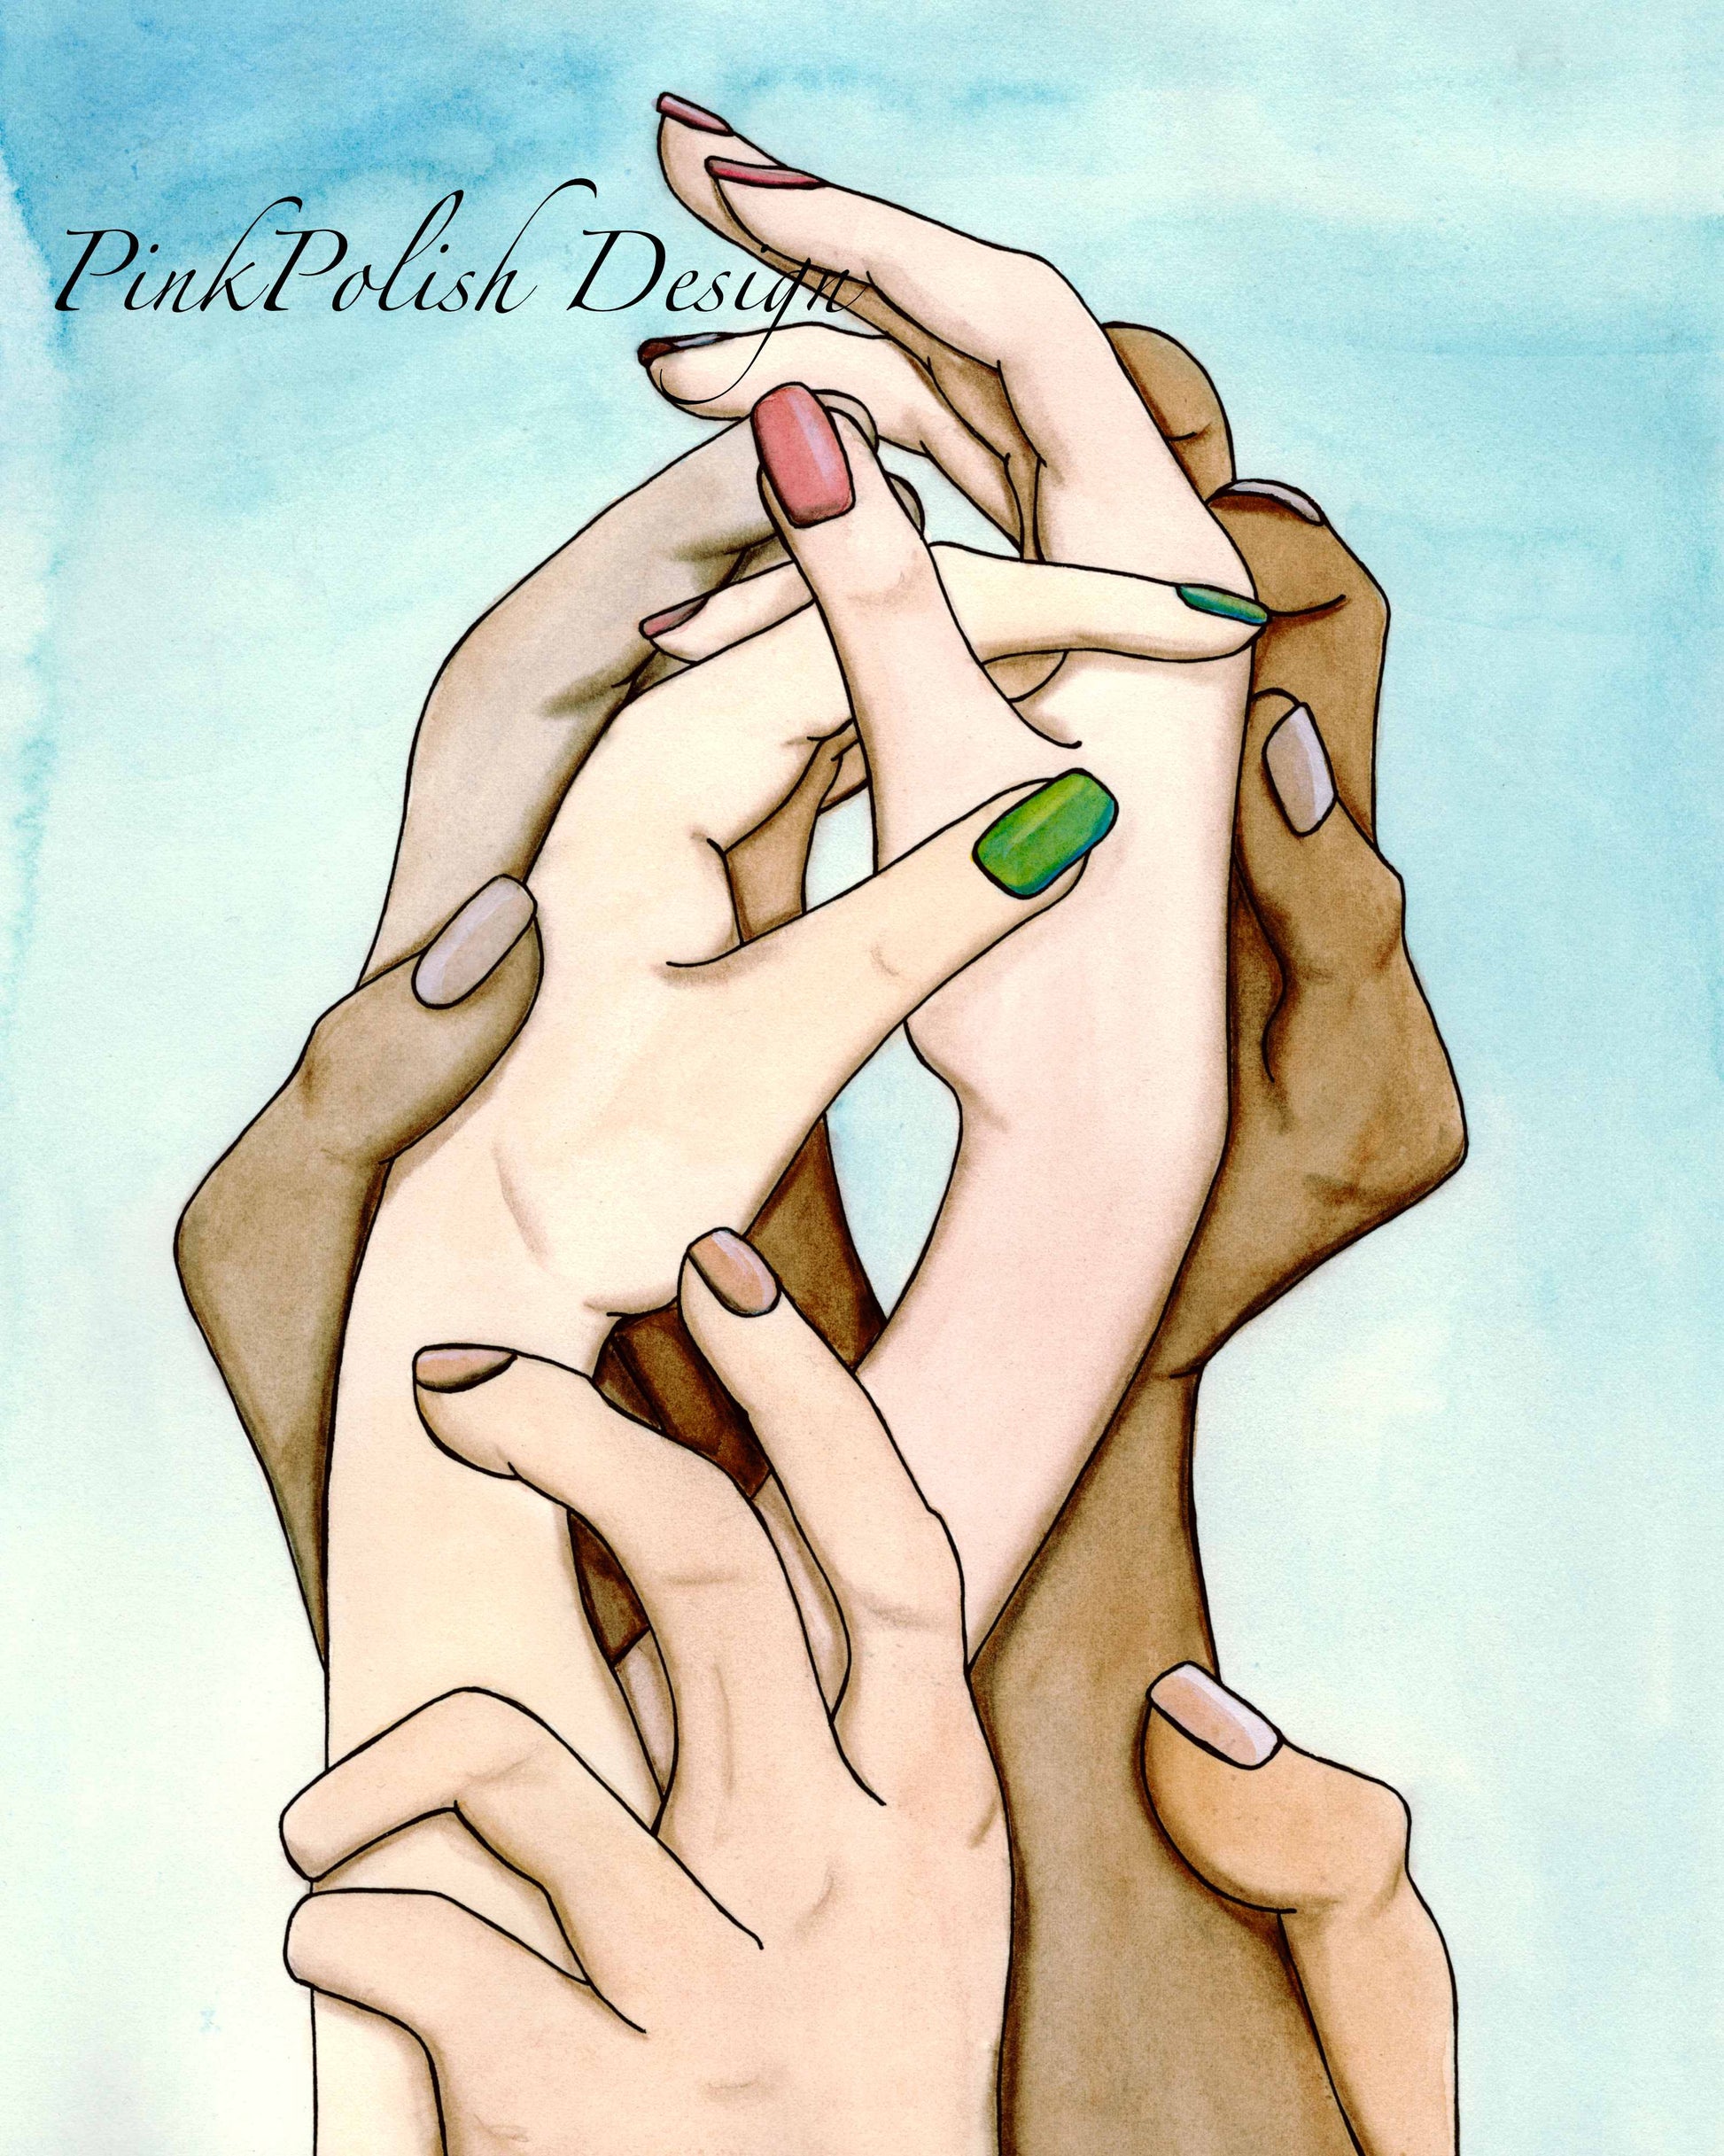 PinkPolish Design Posters, Prints, & Visual Artwork "Helping Hands" Watercolor Painting: Art Print